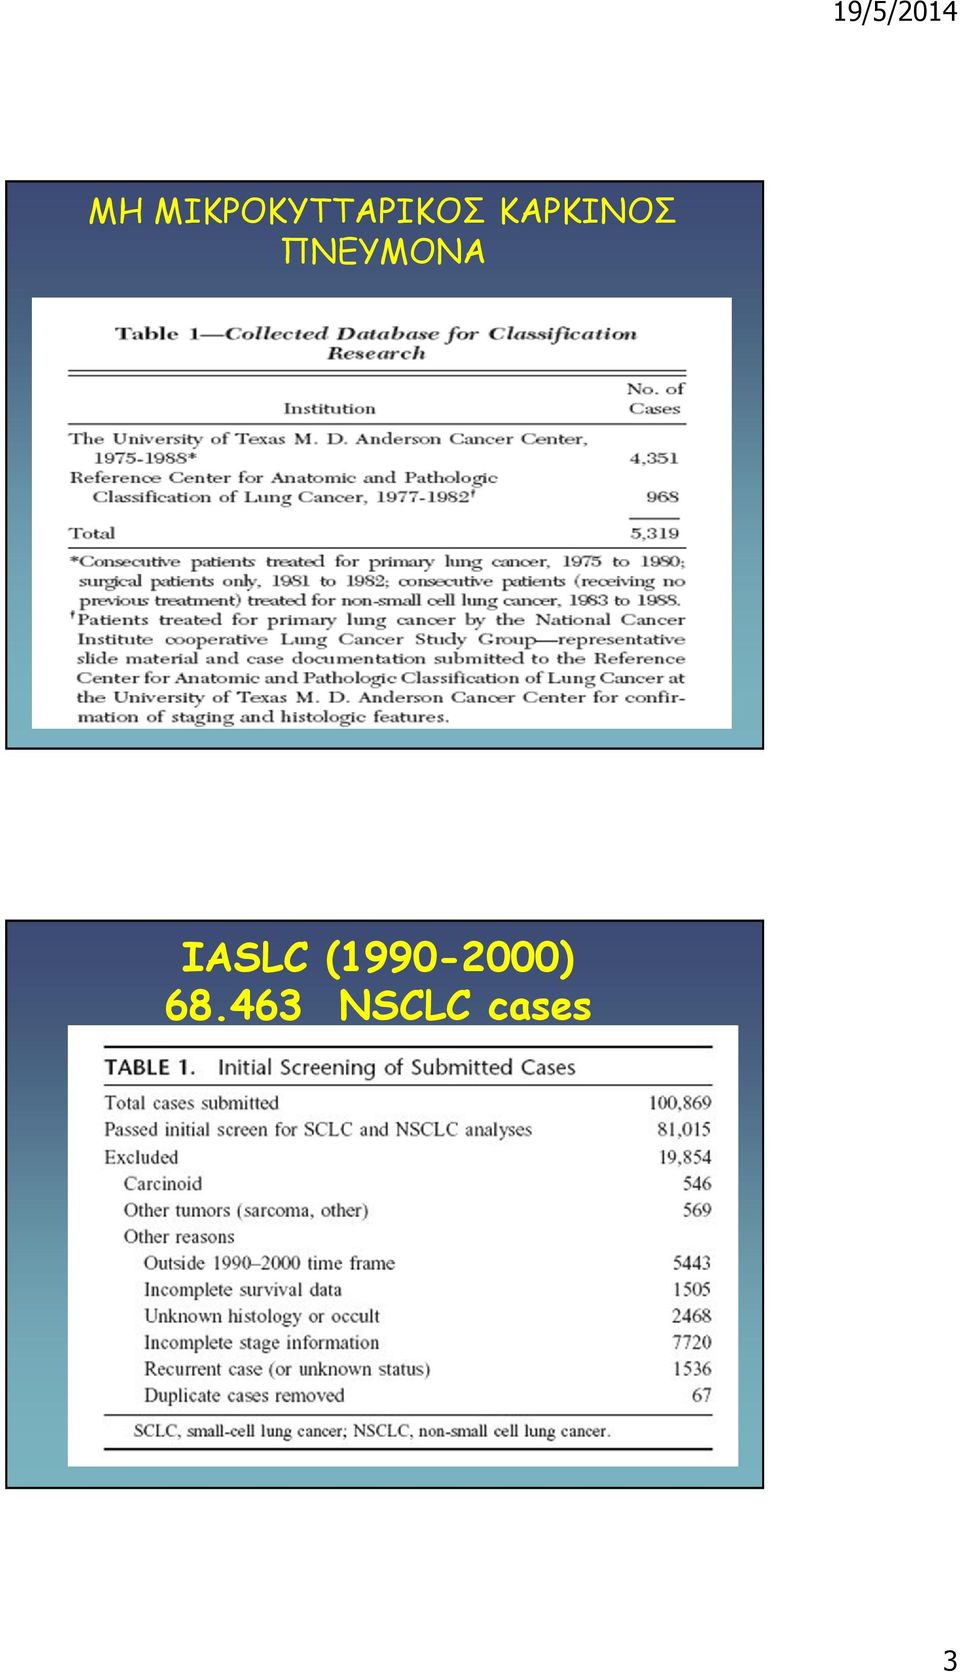 IASLC (1990-2000)